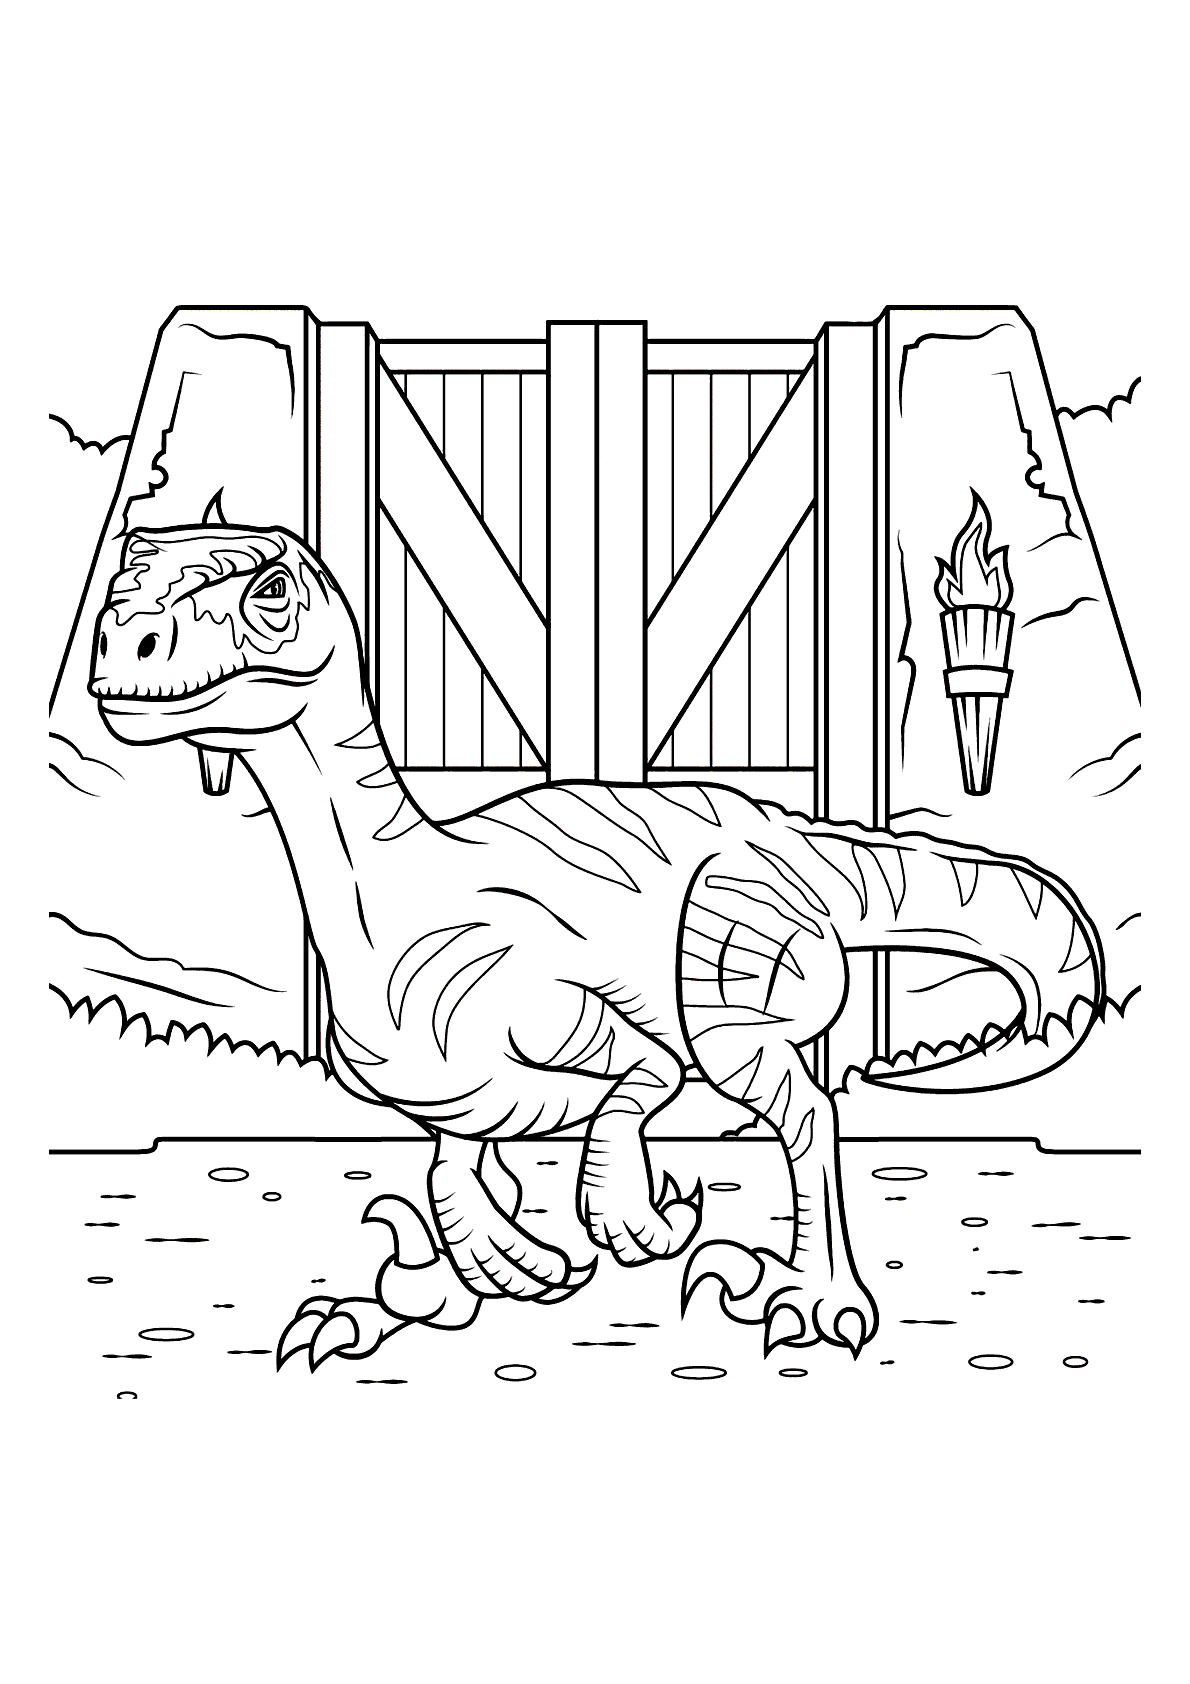 Dinossauro velociraptor para colorir - Imprimir Desenhos